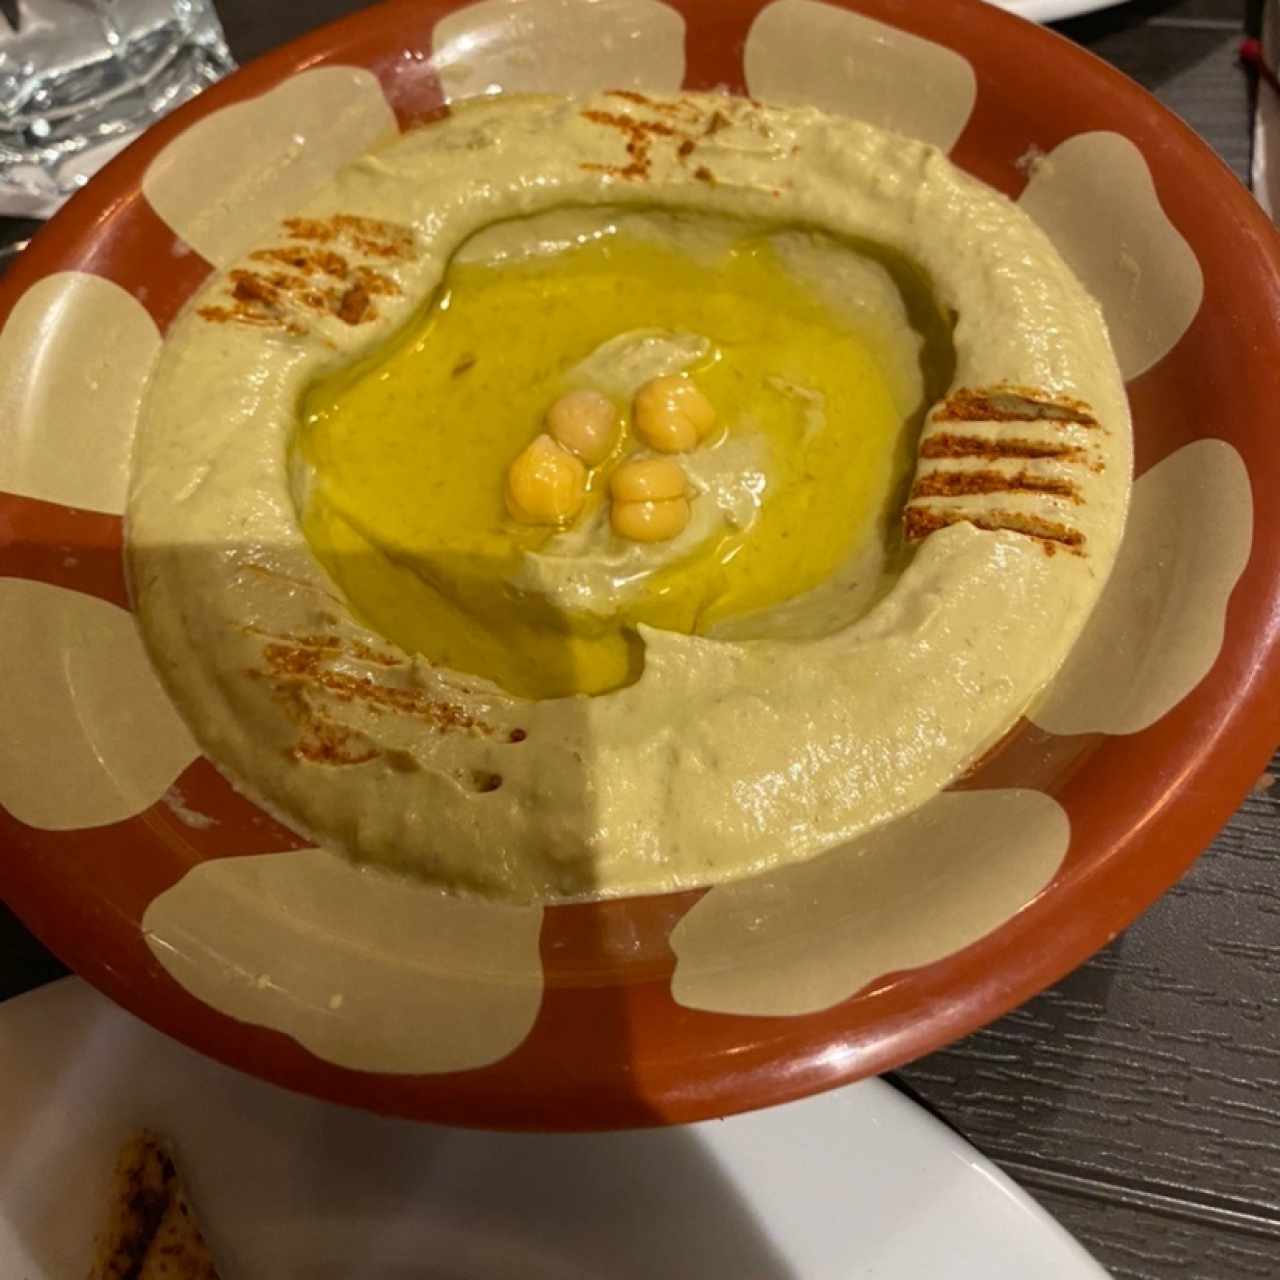 Entradas - Hummus de Aguacate